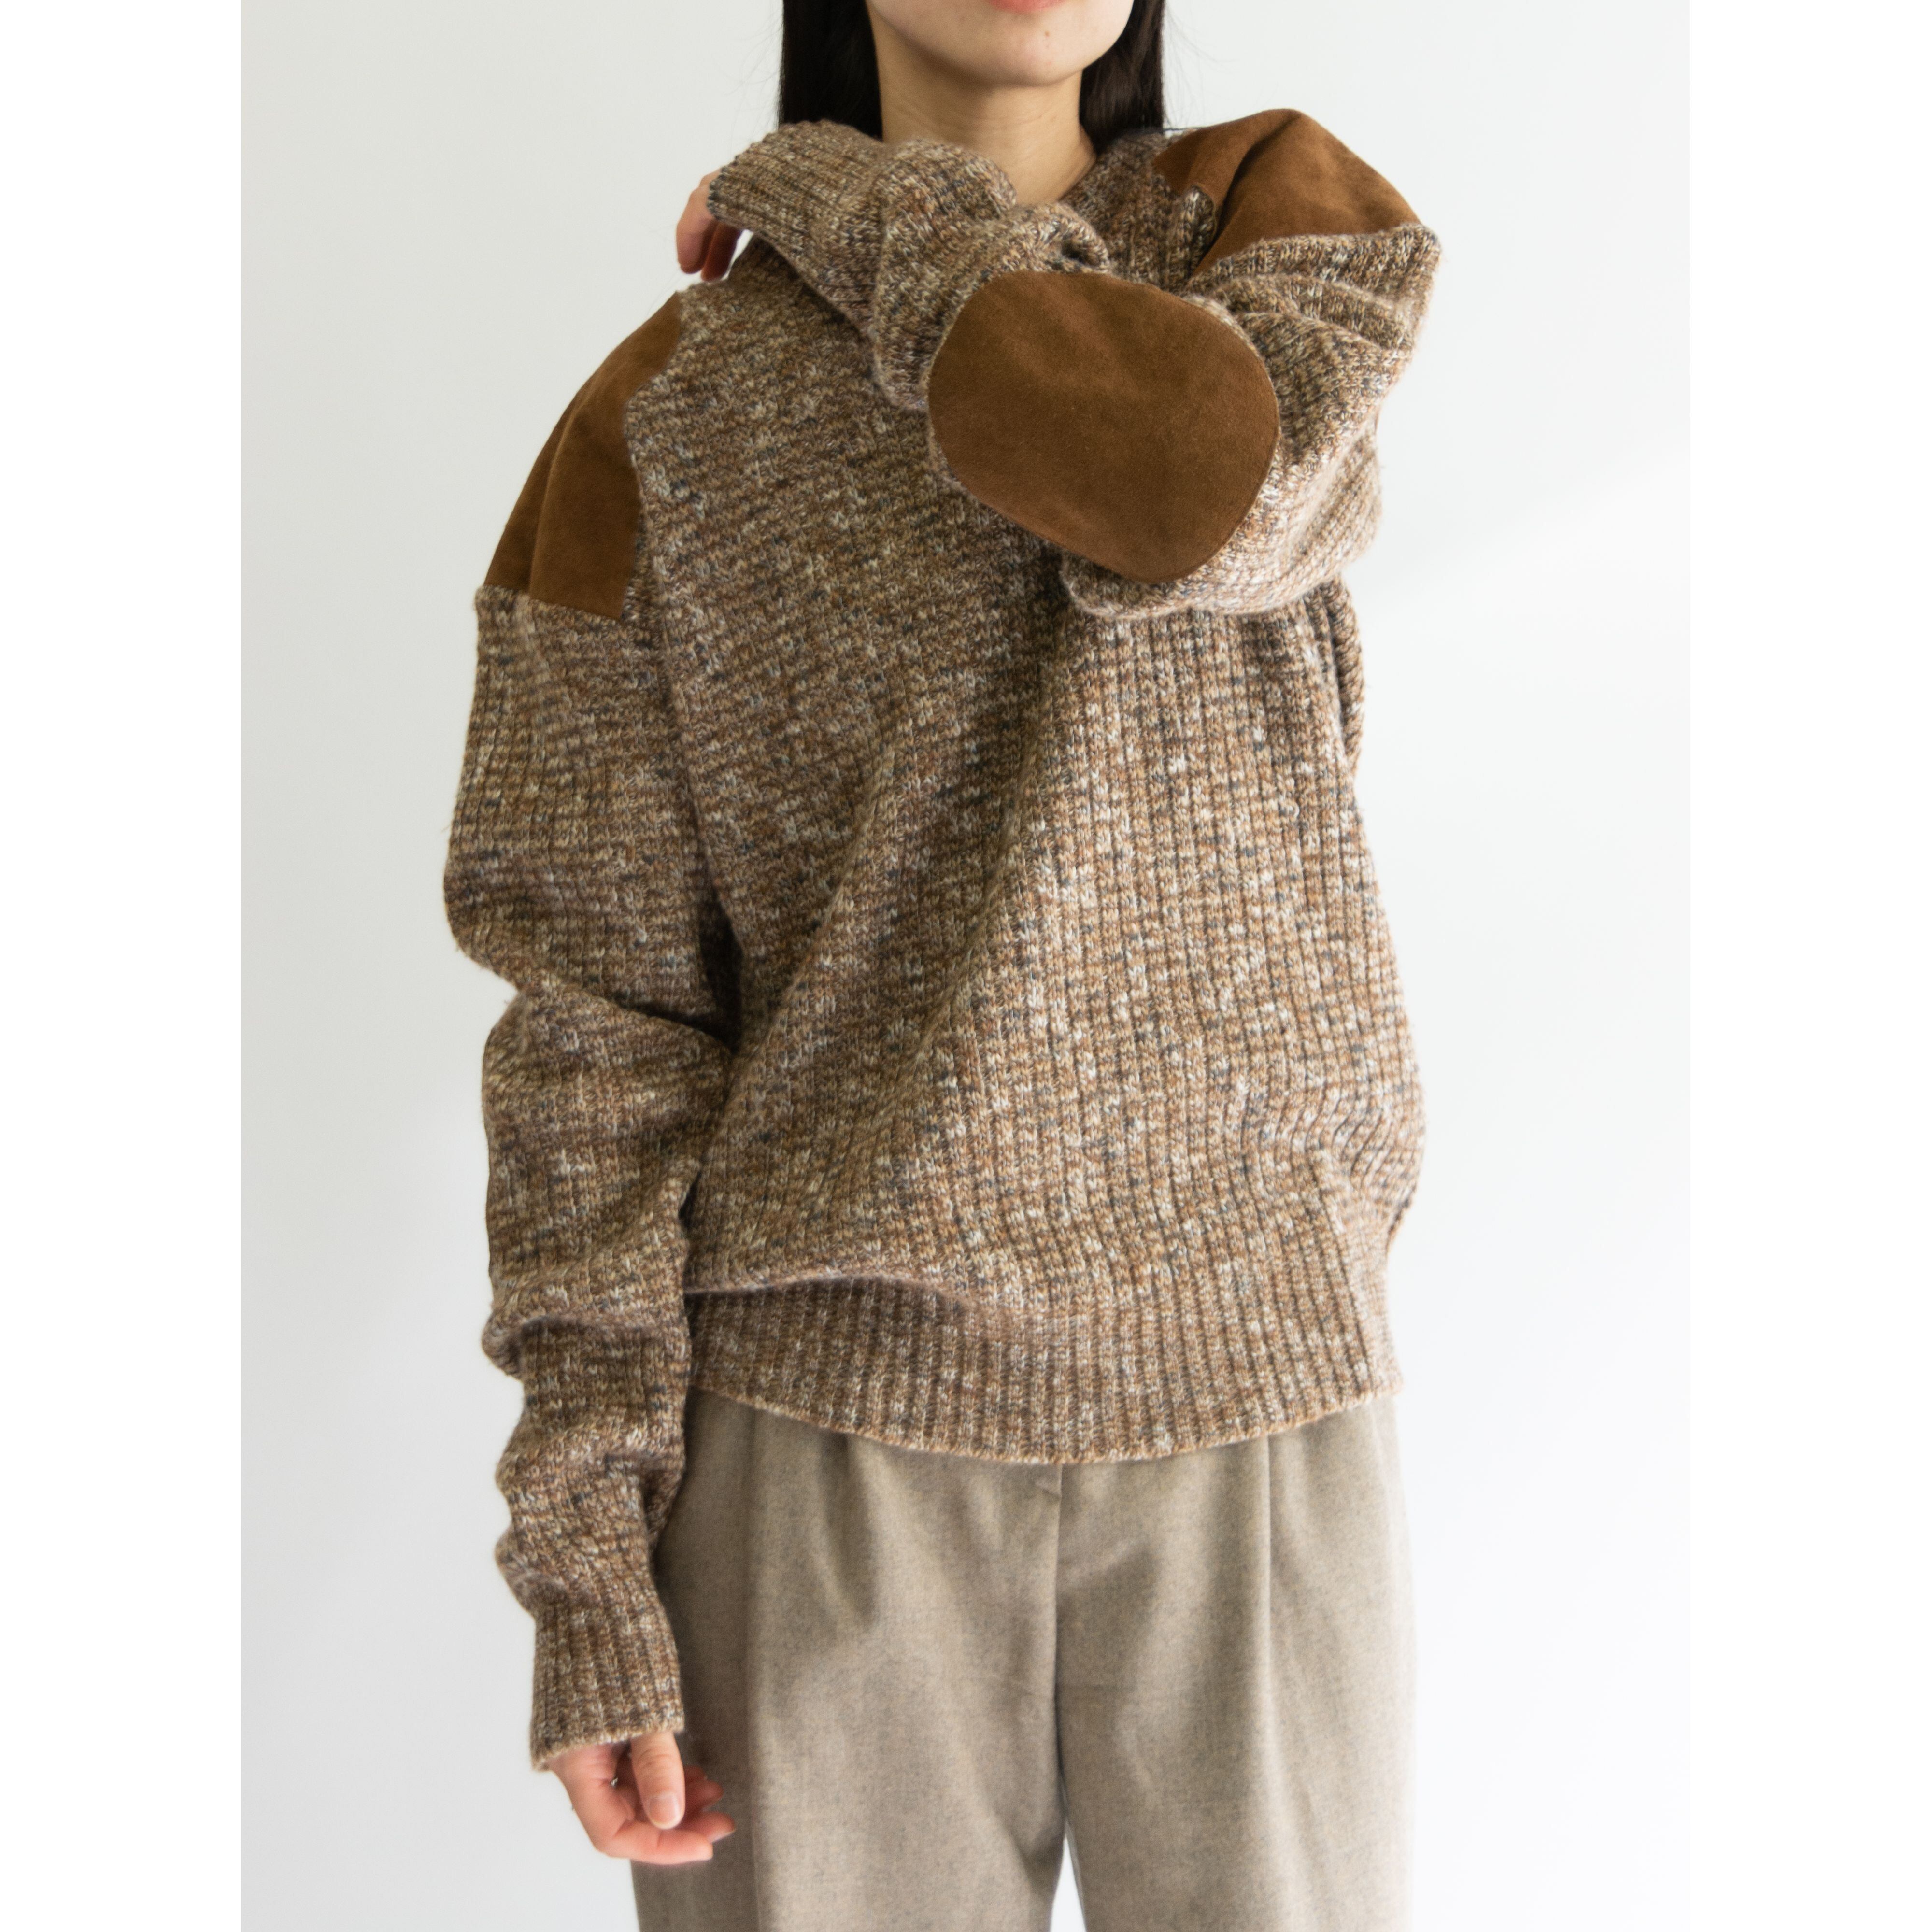 【Creation Scheitlin】Made in Switzerland Polyacryl-Wool Commando Sweater（スイス製 アクリルウールコマンドセーター ニット）